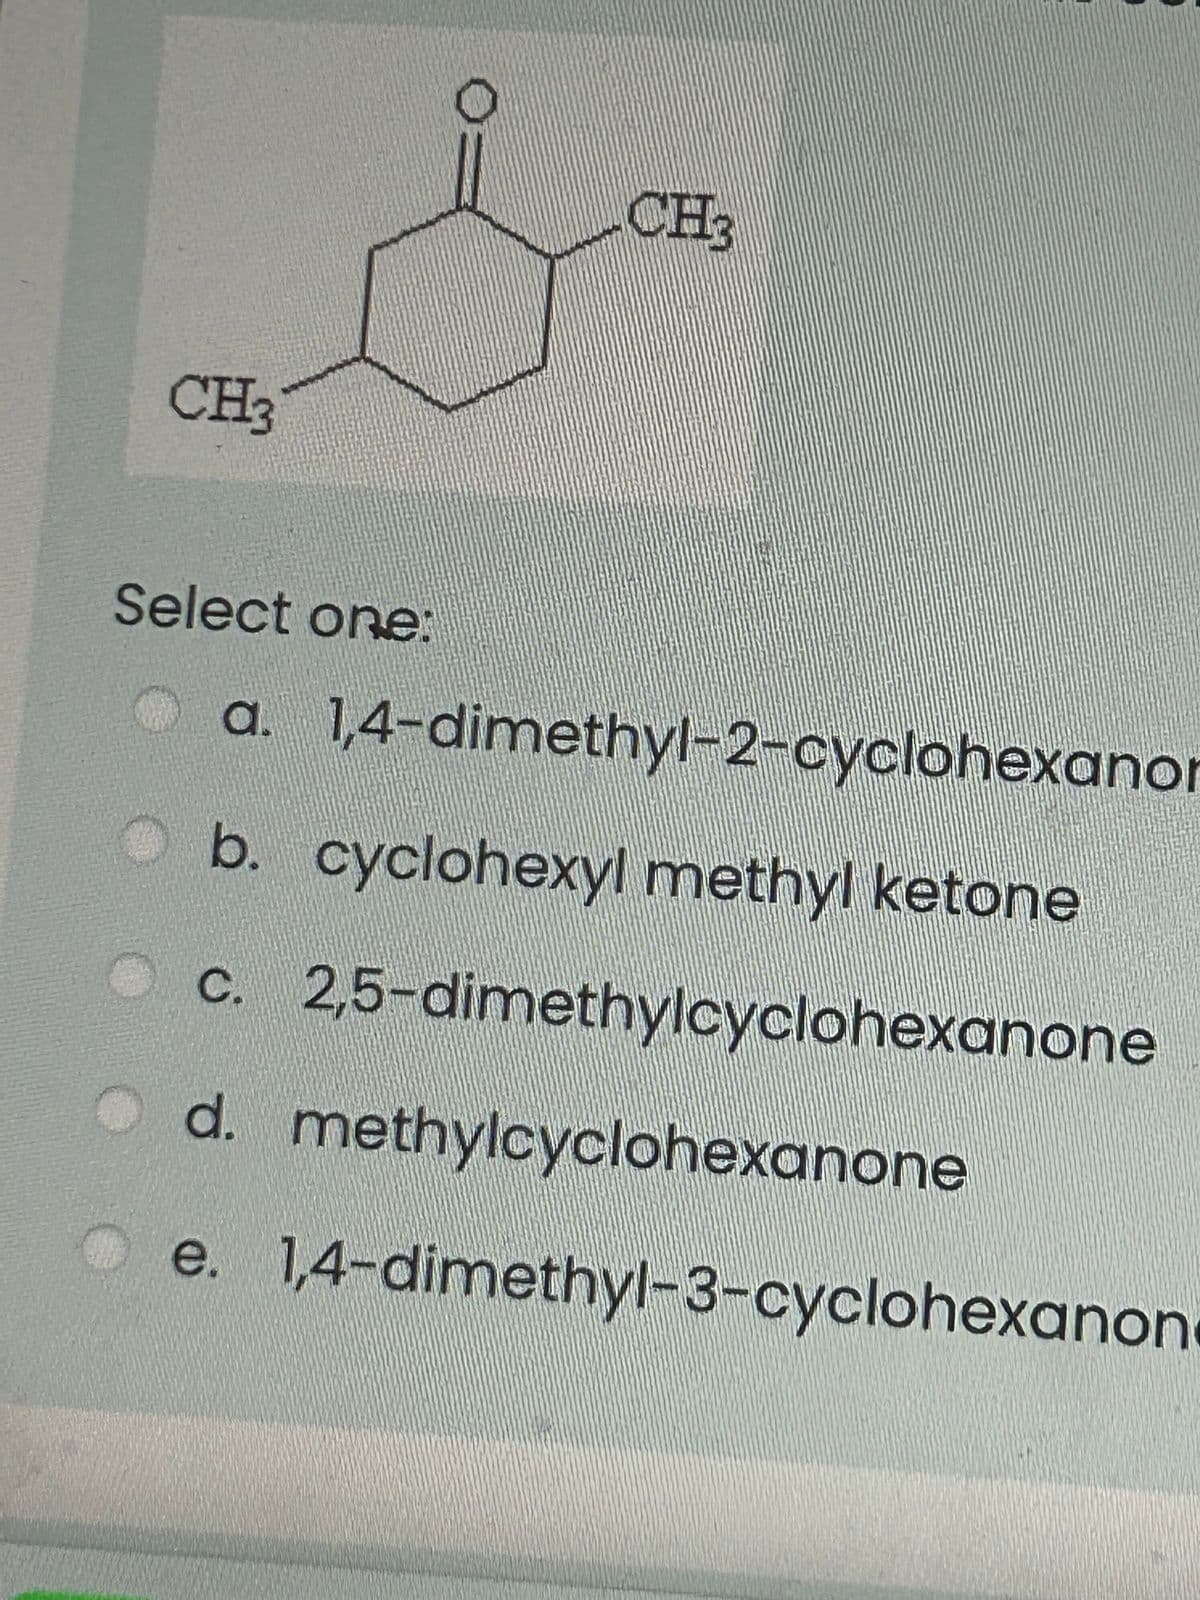 CH3
Select one:
CH₂
a. 1,4-dimethyl-2-cyclohexanor
Ob. cyclohexyl methyl ketone
c. 2,5-dimethylcyclohexanone
d. methylcyclohexanone
e. 1,4-dimethyl-3-cyclohexanon